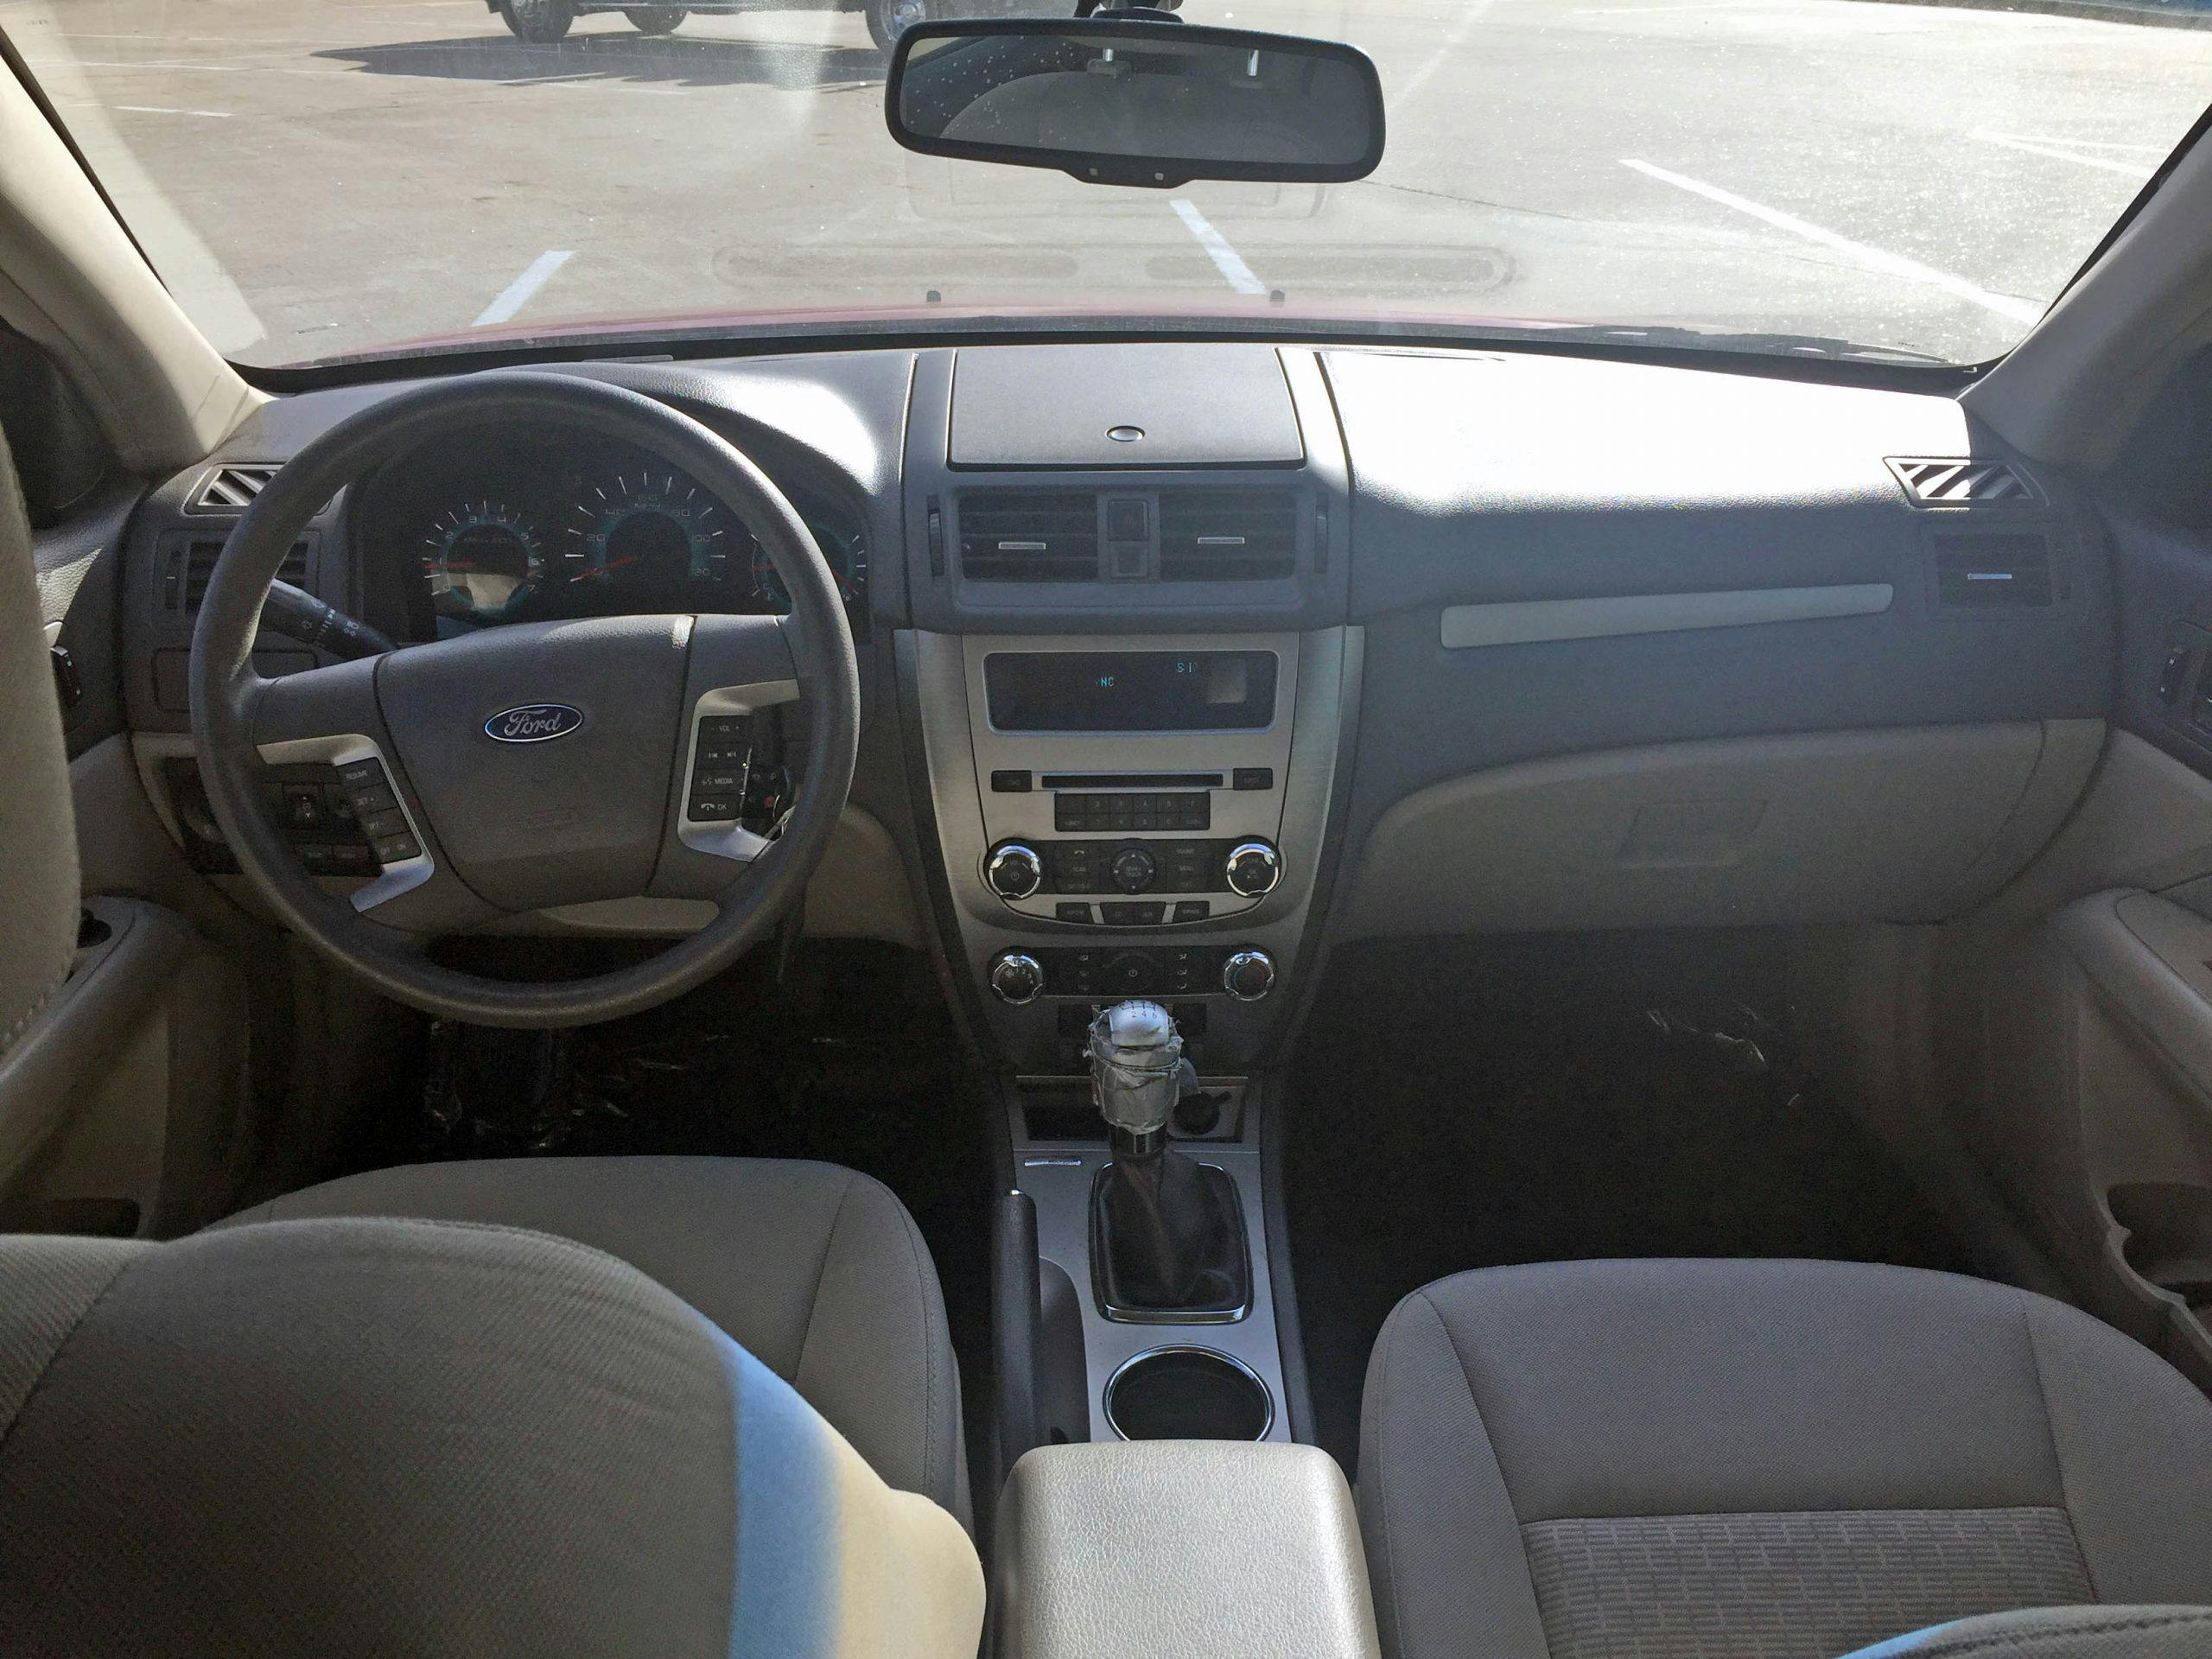 2010 Ford Fusion SE manual transmission